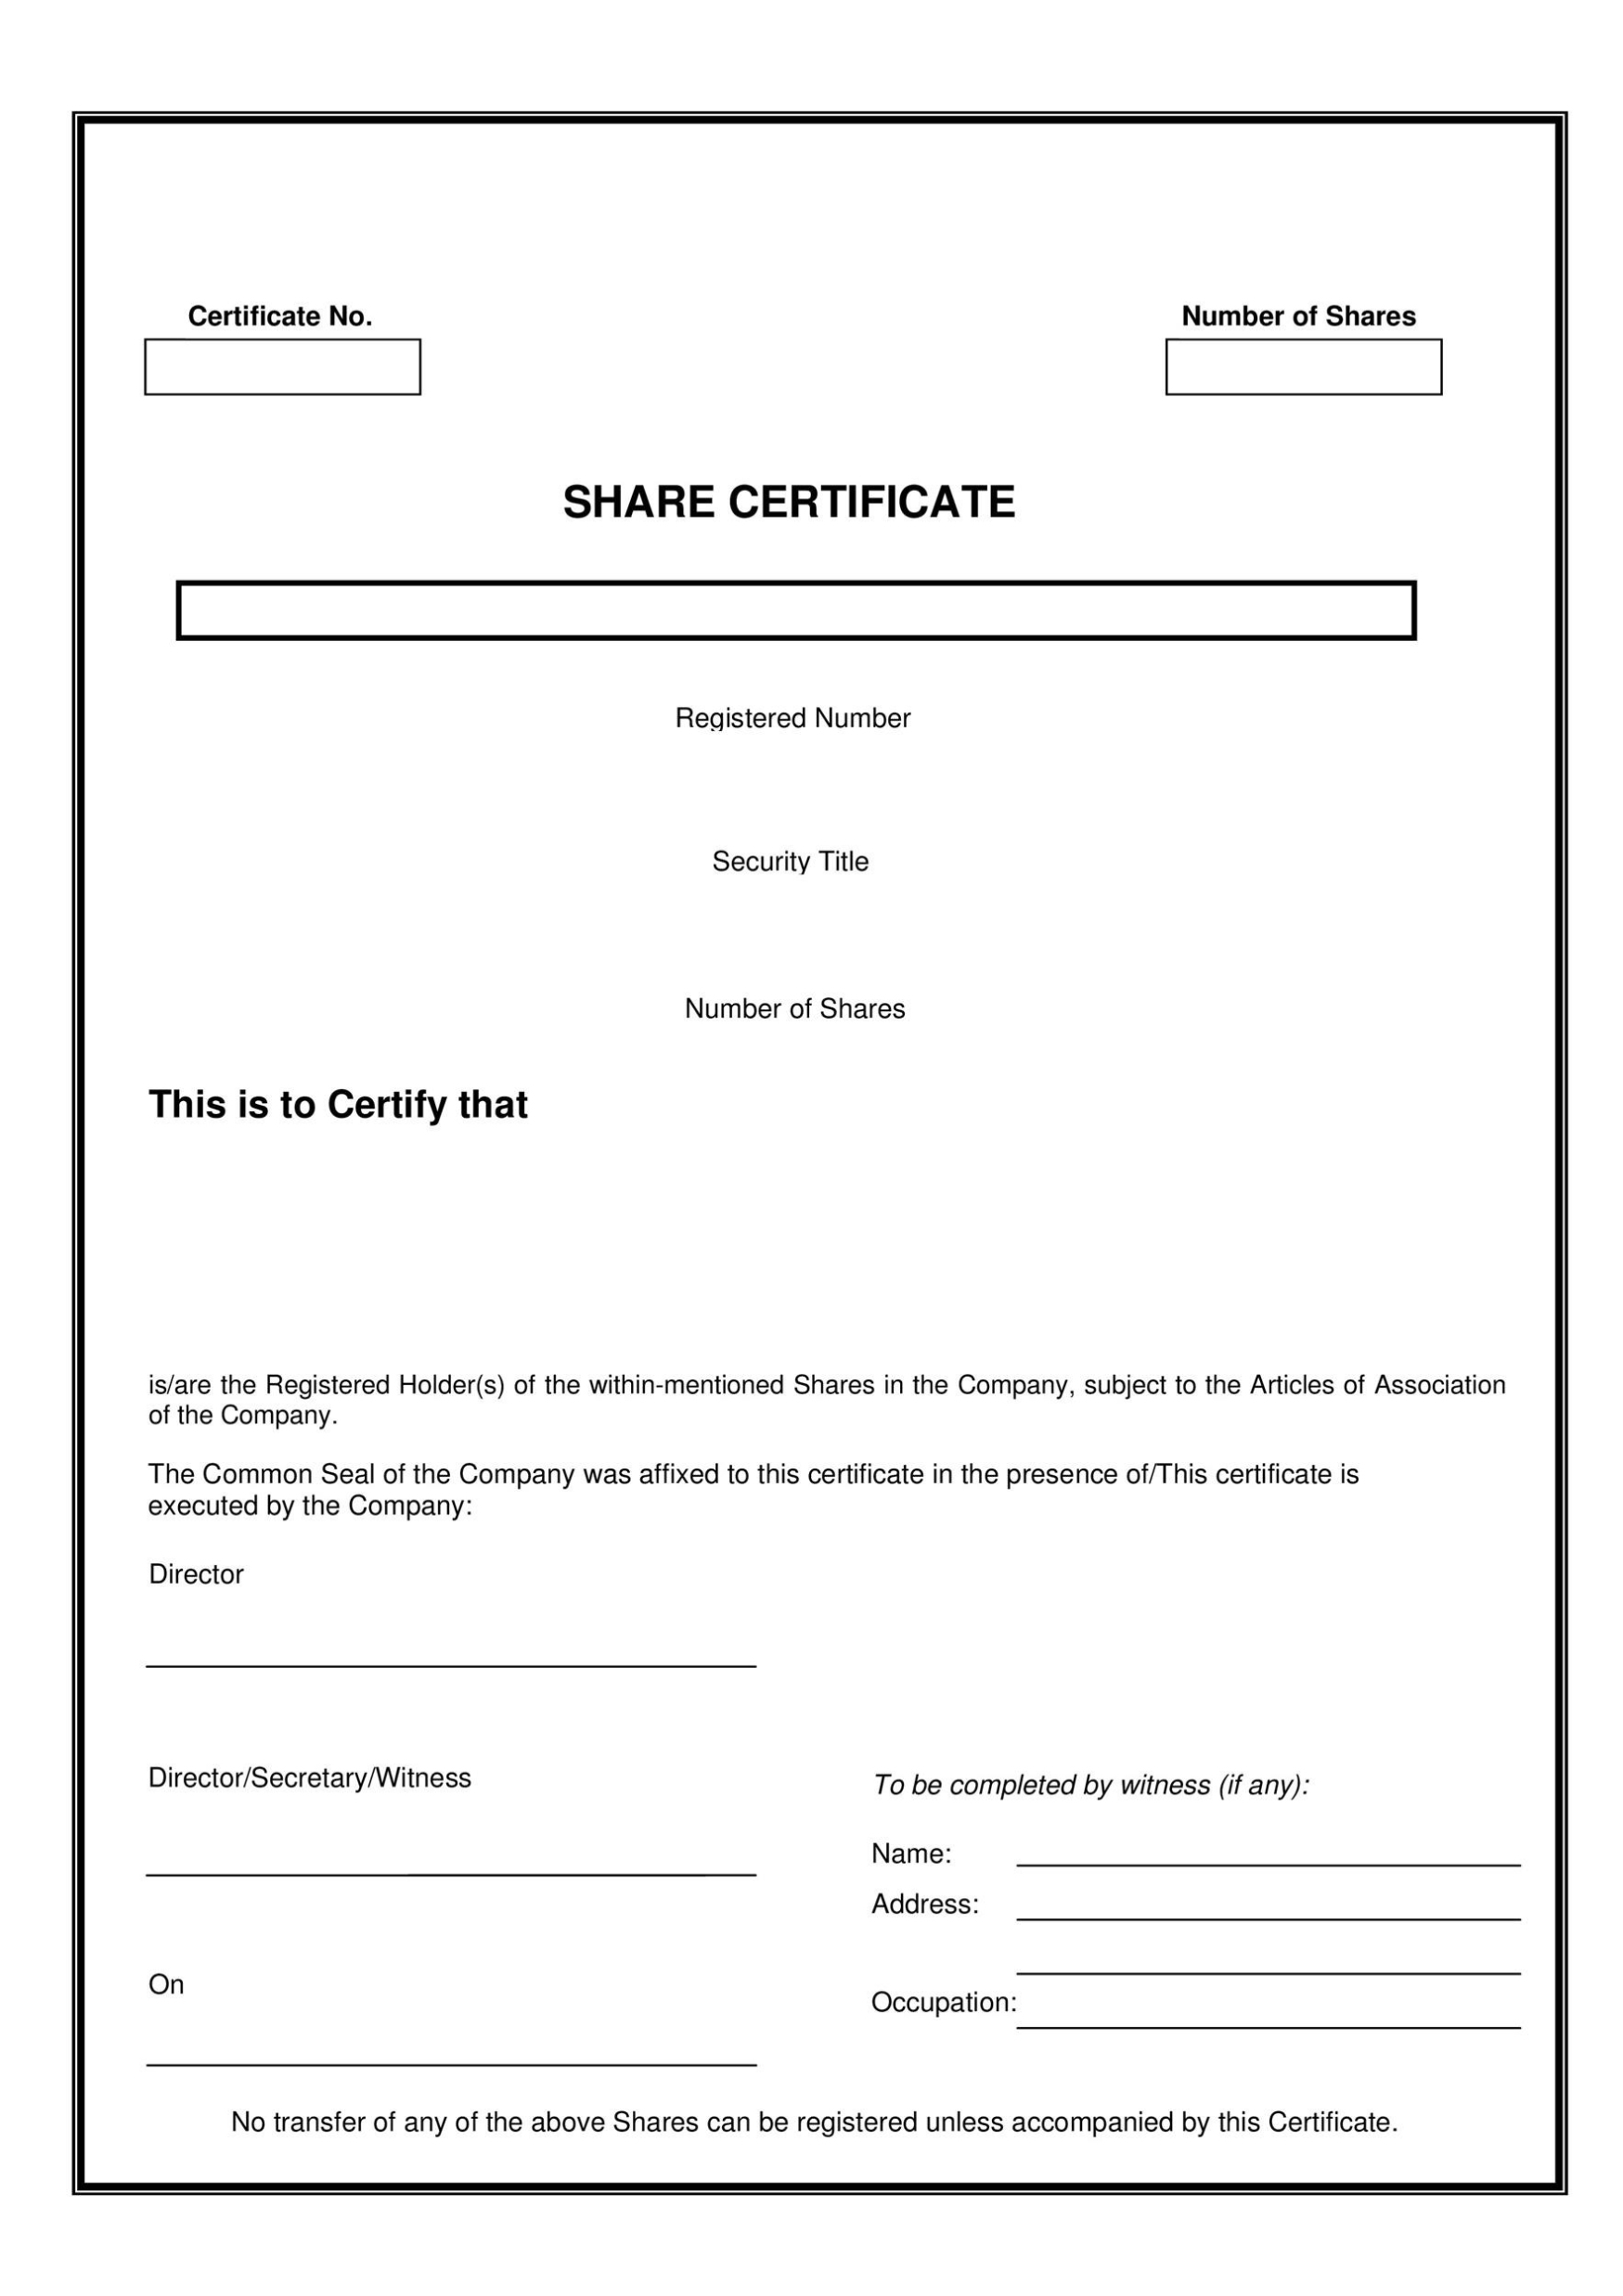 40+ Free Stock Certificate Templates (Word, Pdf) ᐅ Templatelab In Share Certificate Template Australia